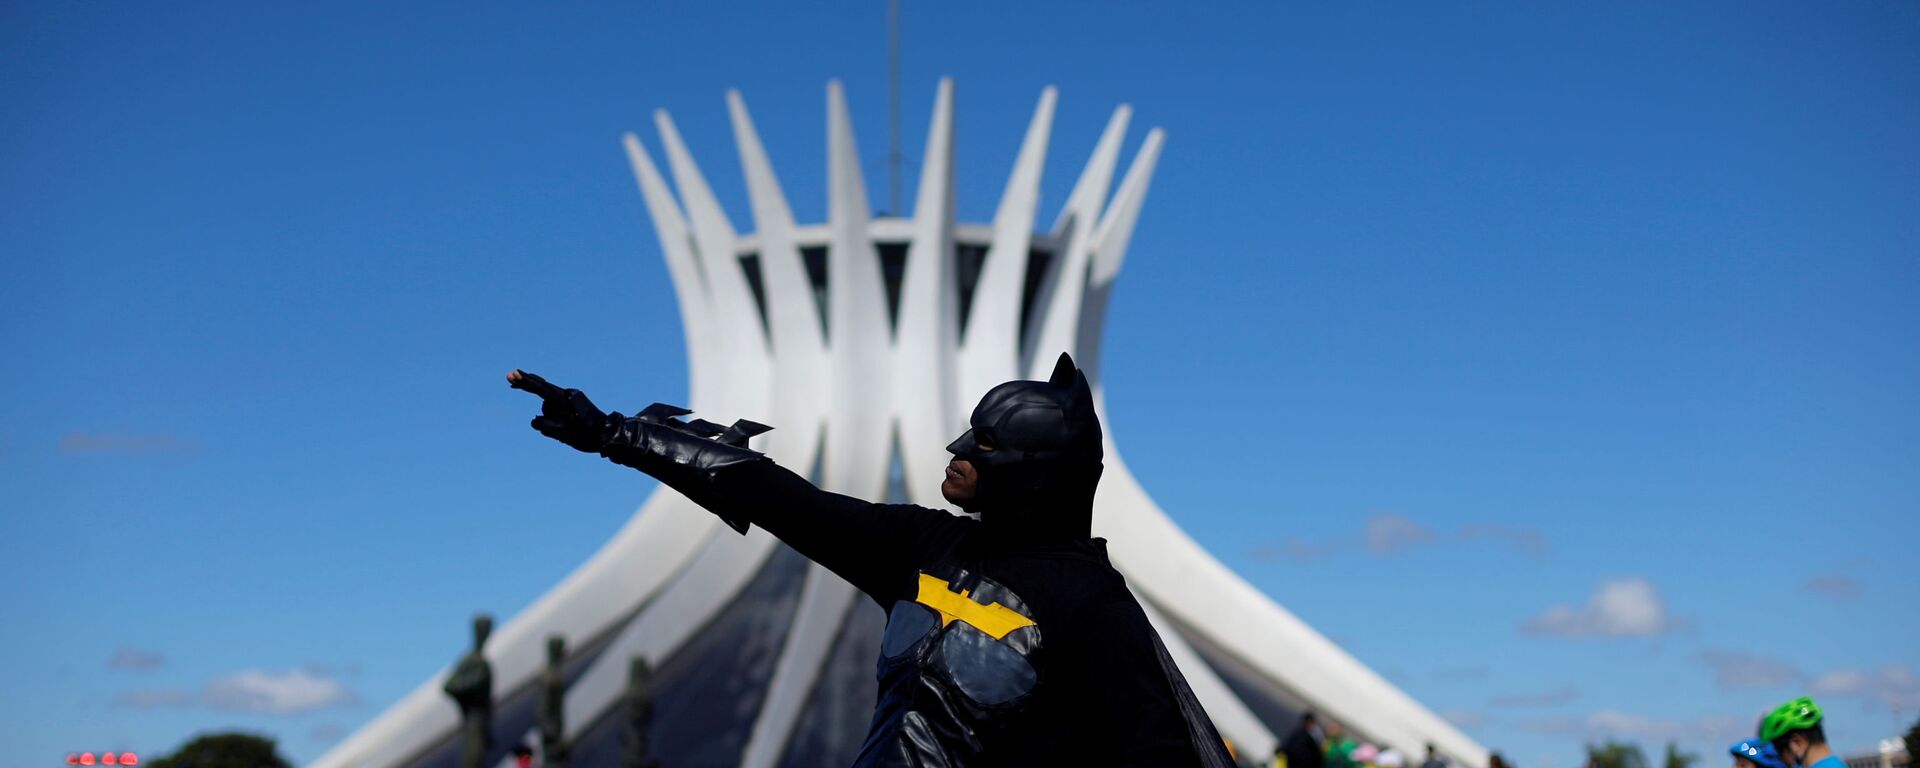 Участник протестов в костюме Бэтмена в Бразилии - Sputnik Азербайджан, 1920, 13.09.2021